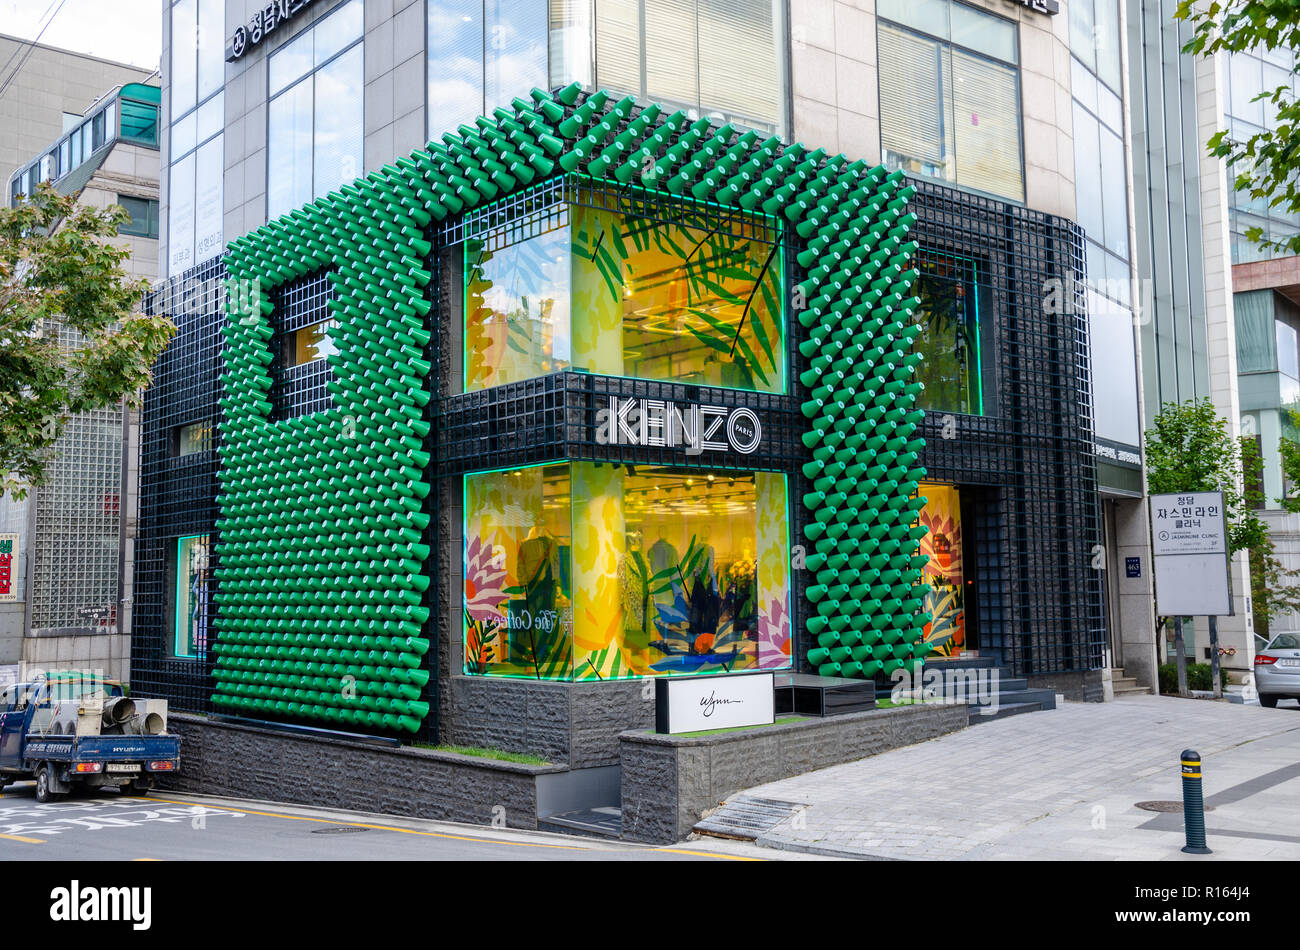 A Kenzo store with a contemporary exterior facade featuring green cones. Gangnam, Seoul, South Korea. Stock Photo